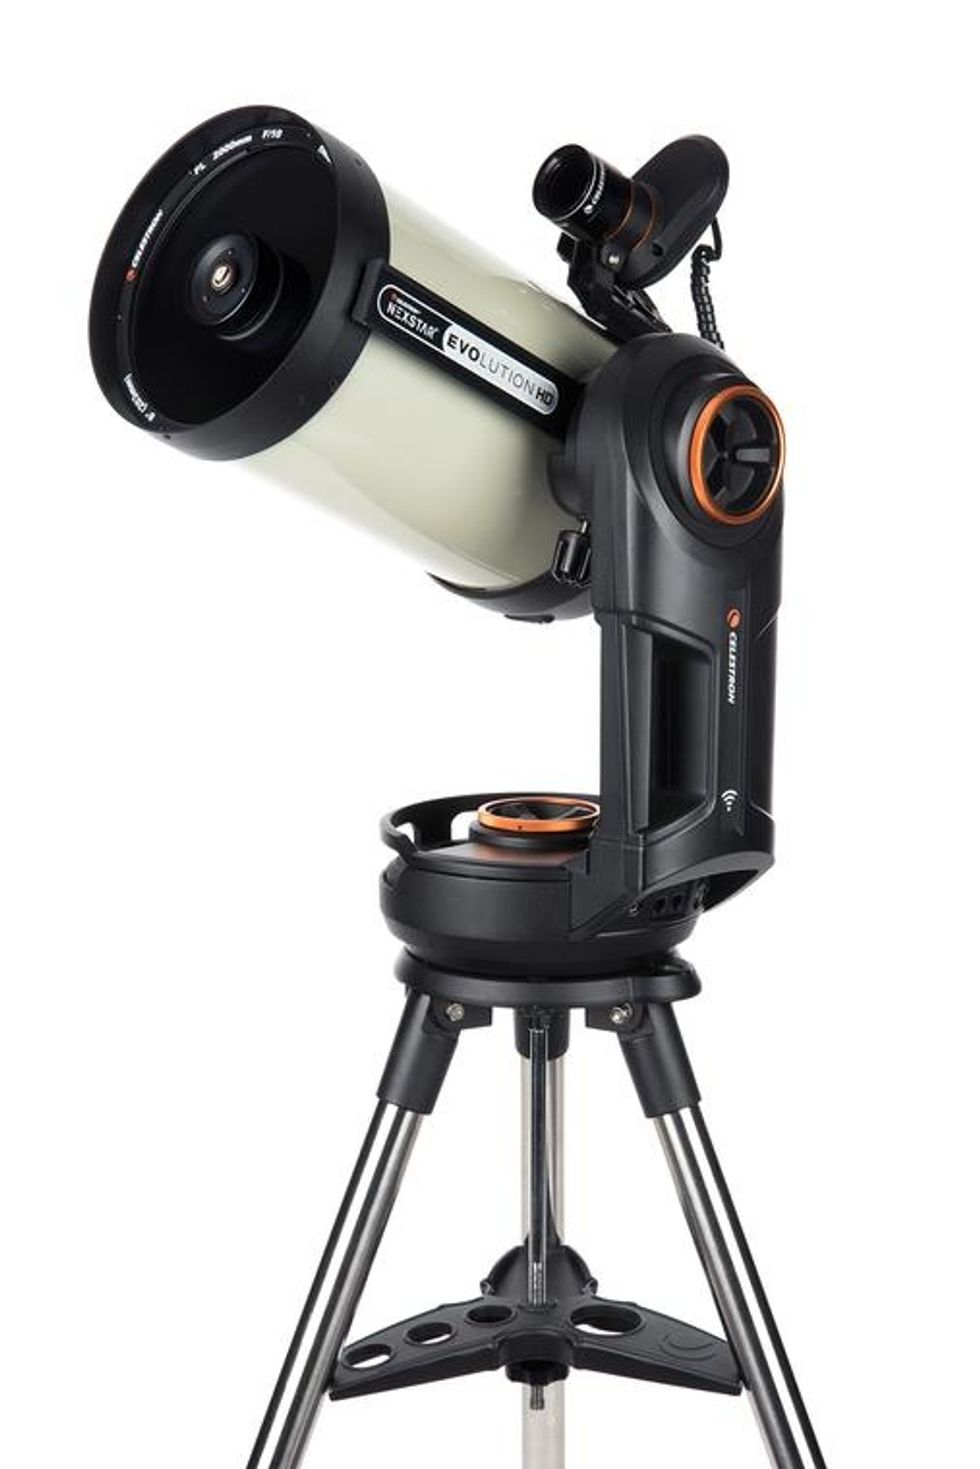 The Celestron Nexstar Evolution 8 HD telescope